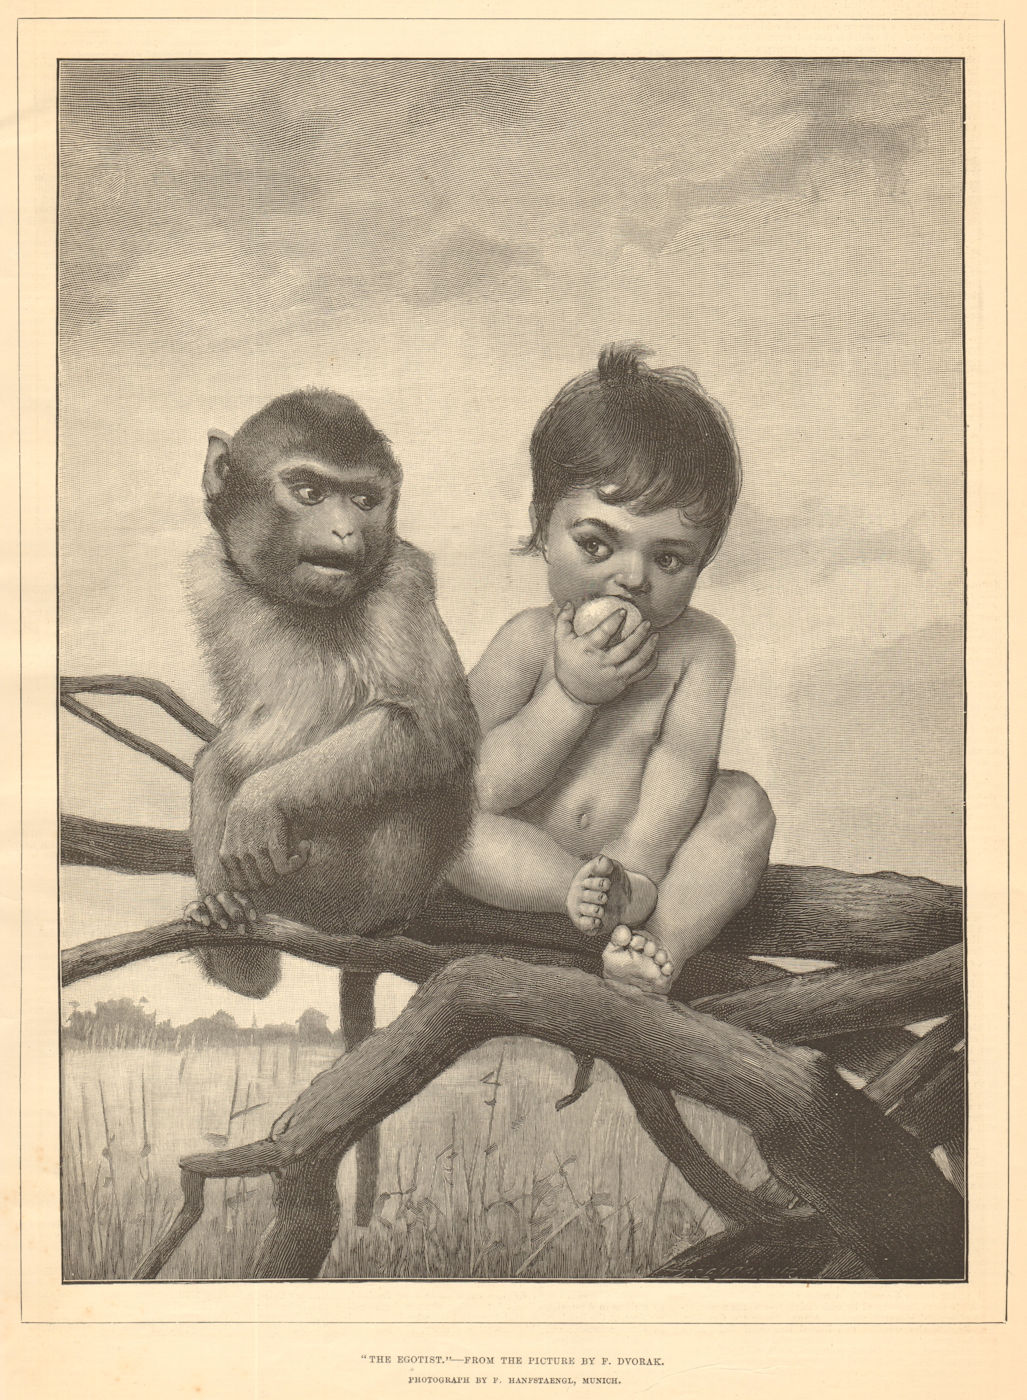 Associate Product "The egotist", by F. Dvorak. Children monkey 1890 antique ILN full page print